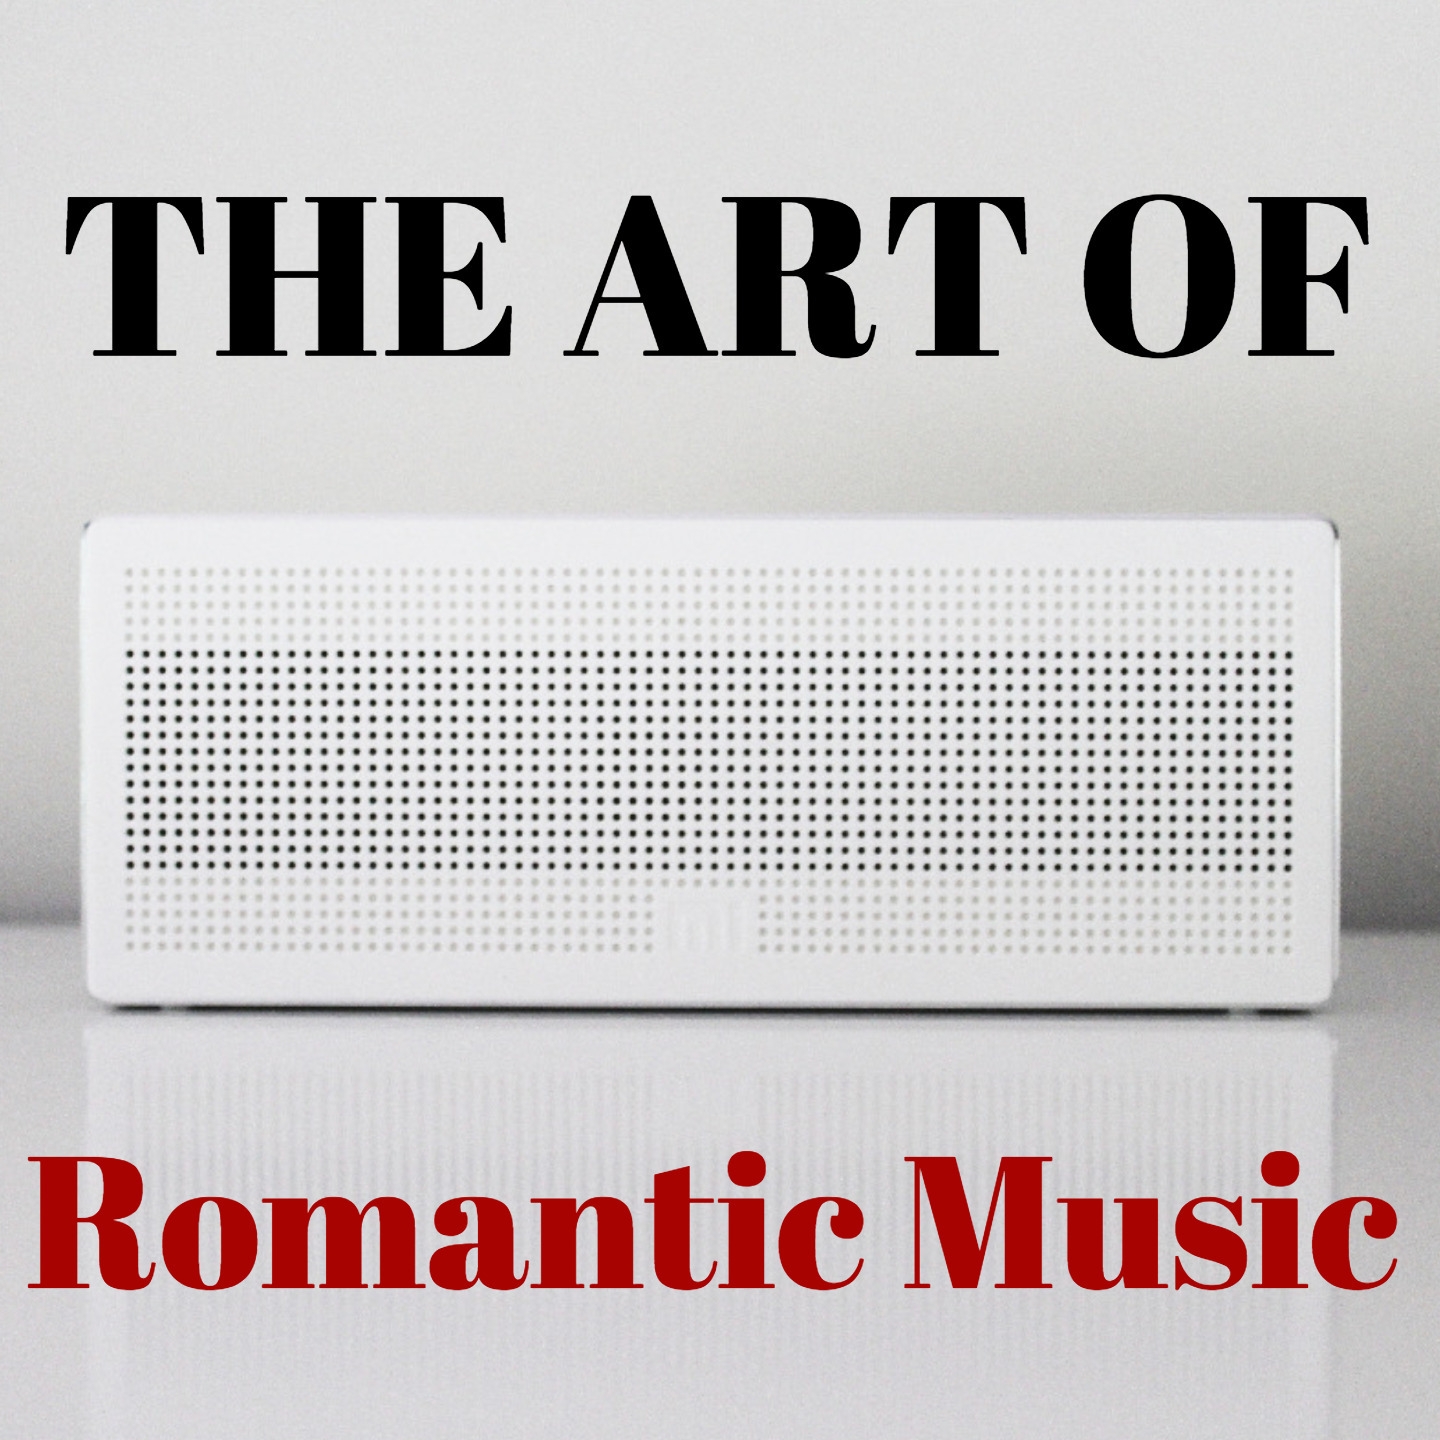 The art of Romantic Music